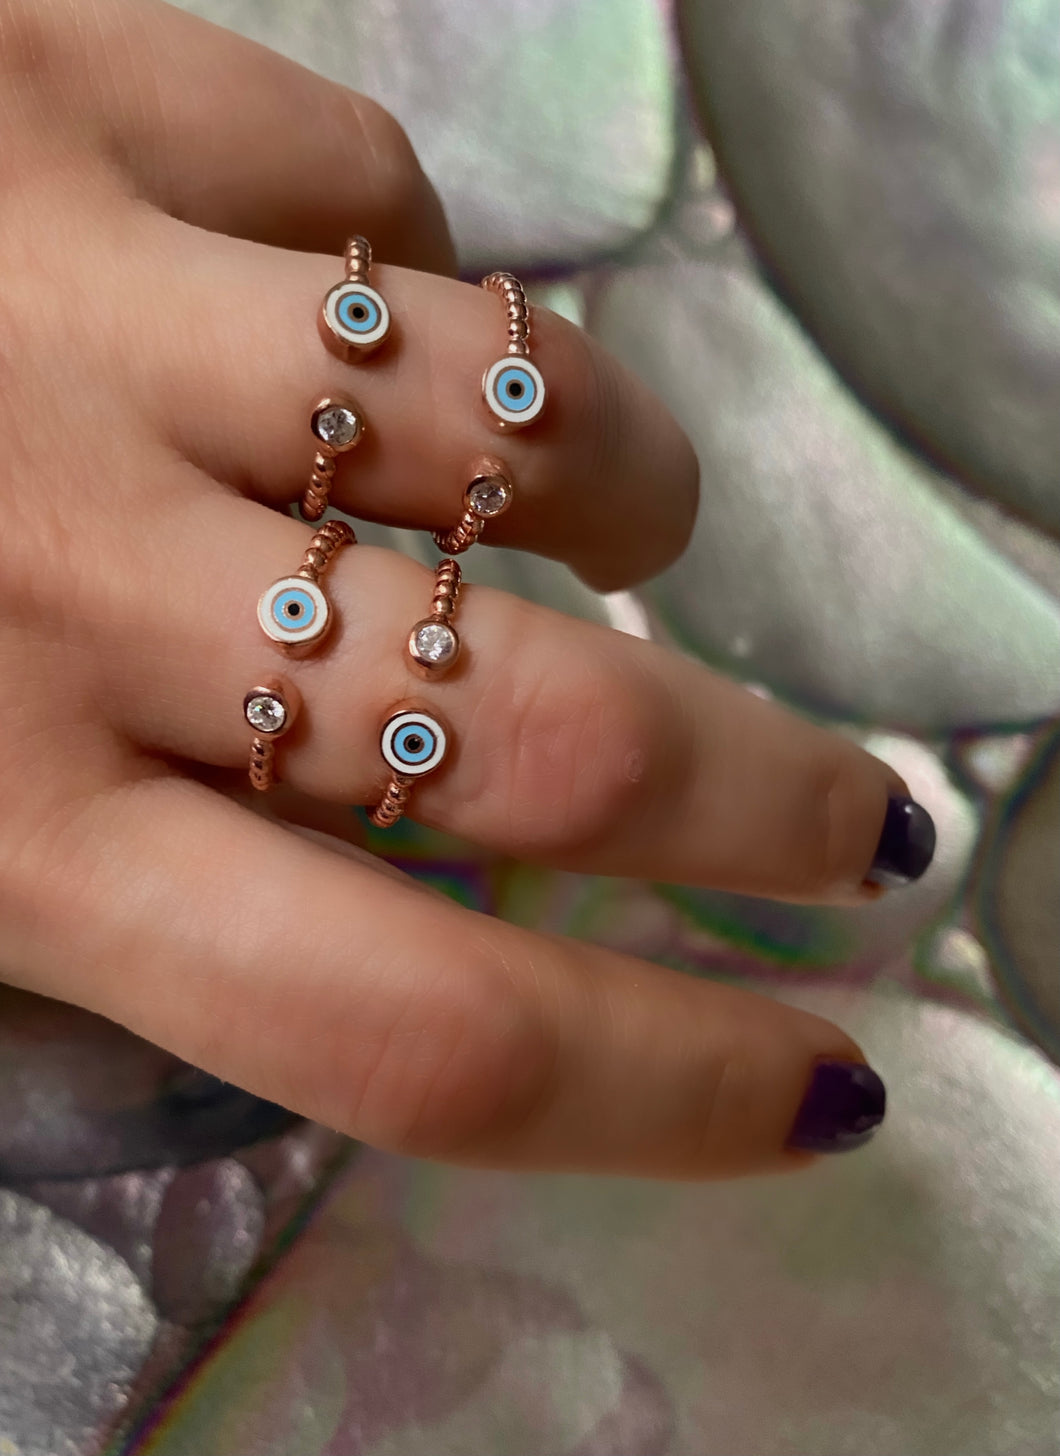 Ring with enamel Evil eye charm - Adjustable